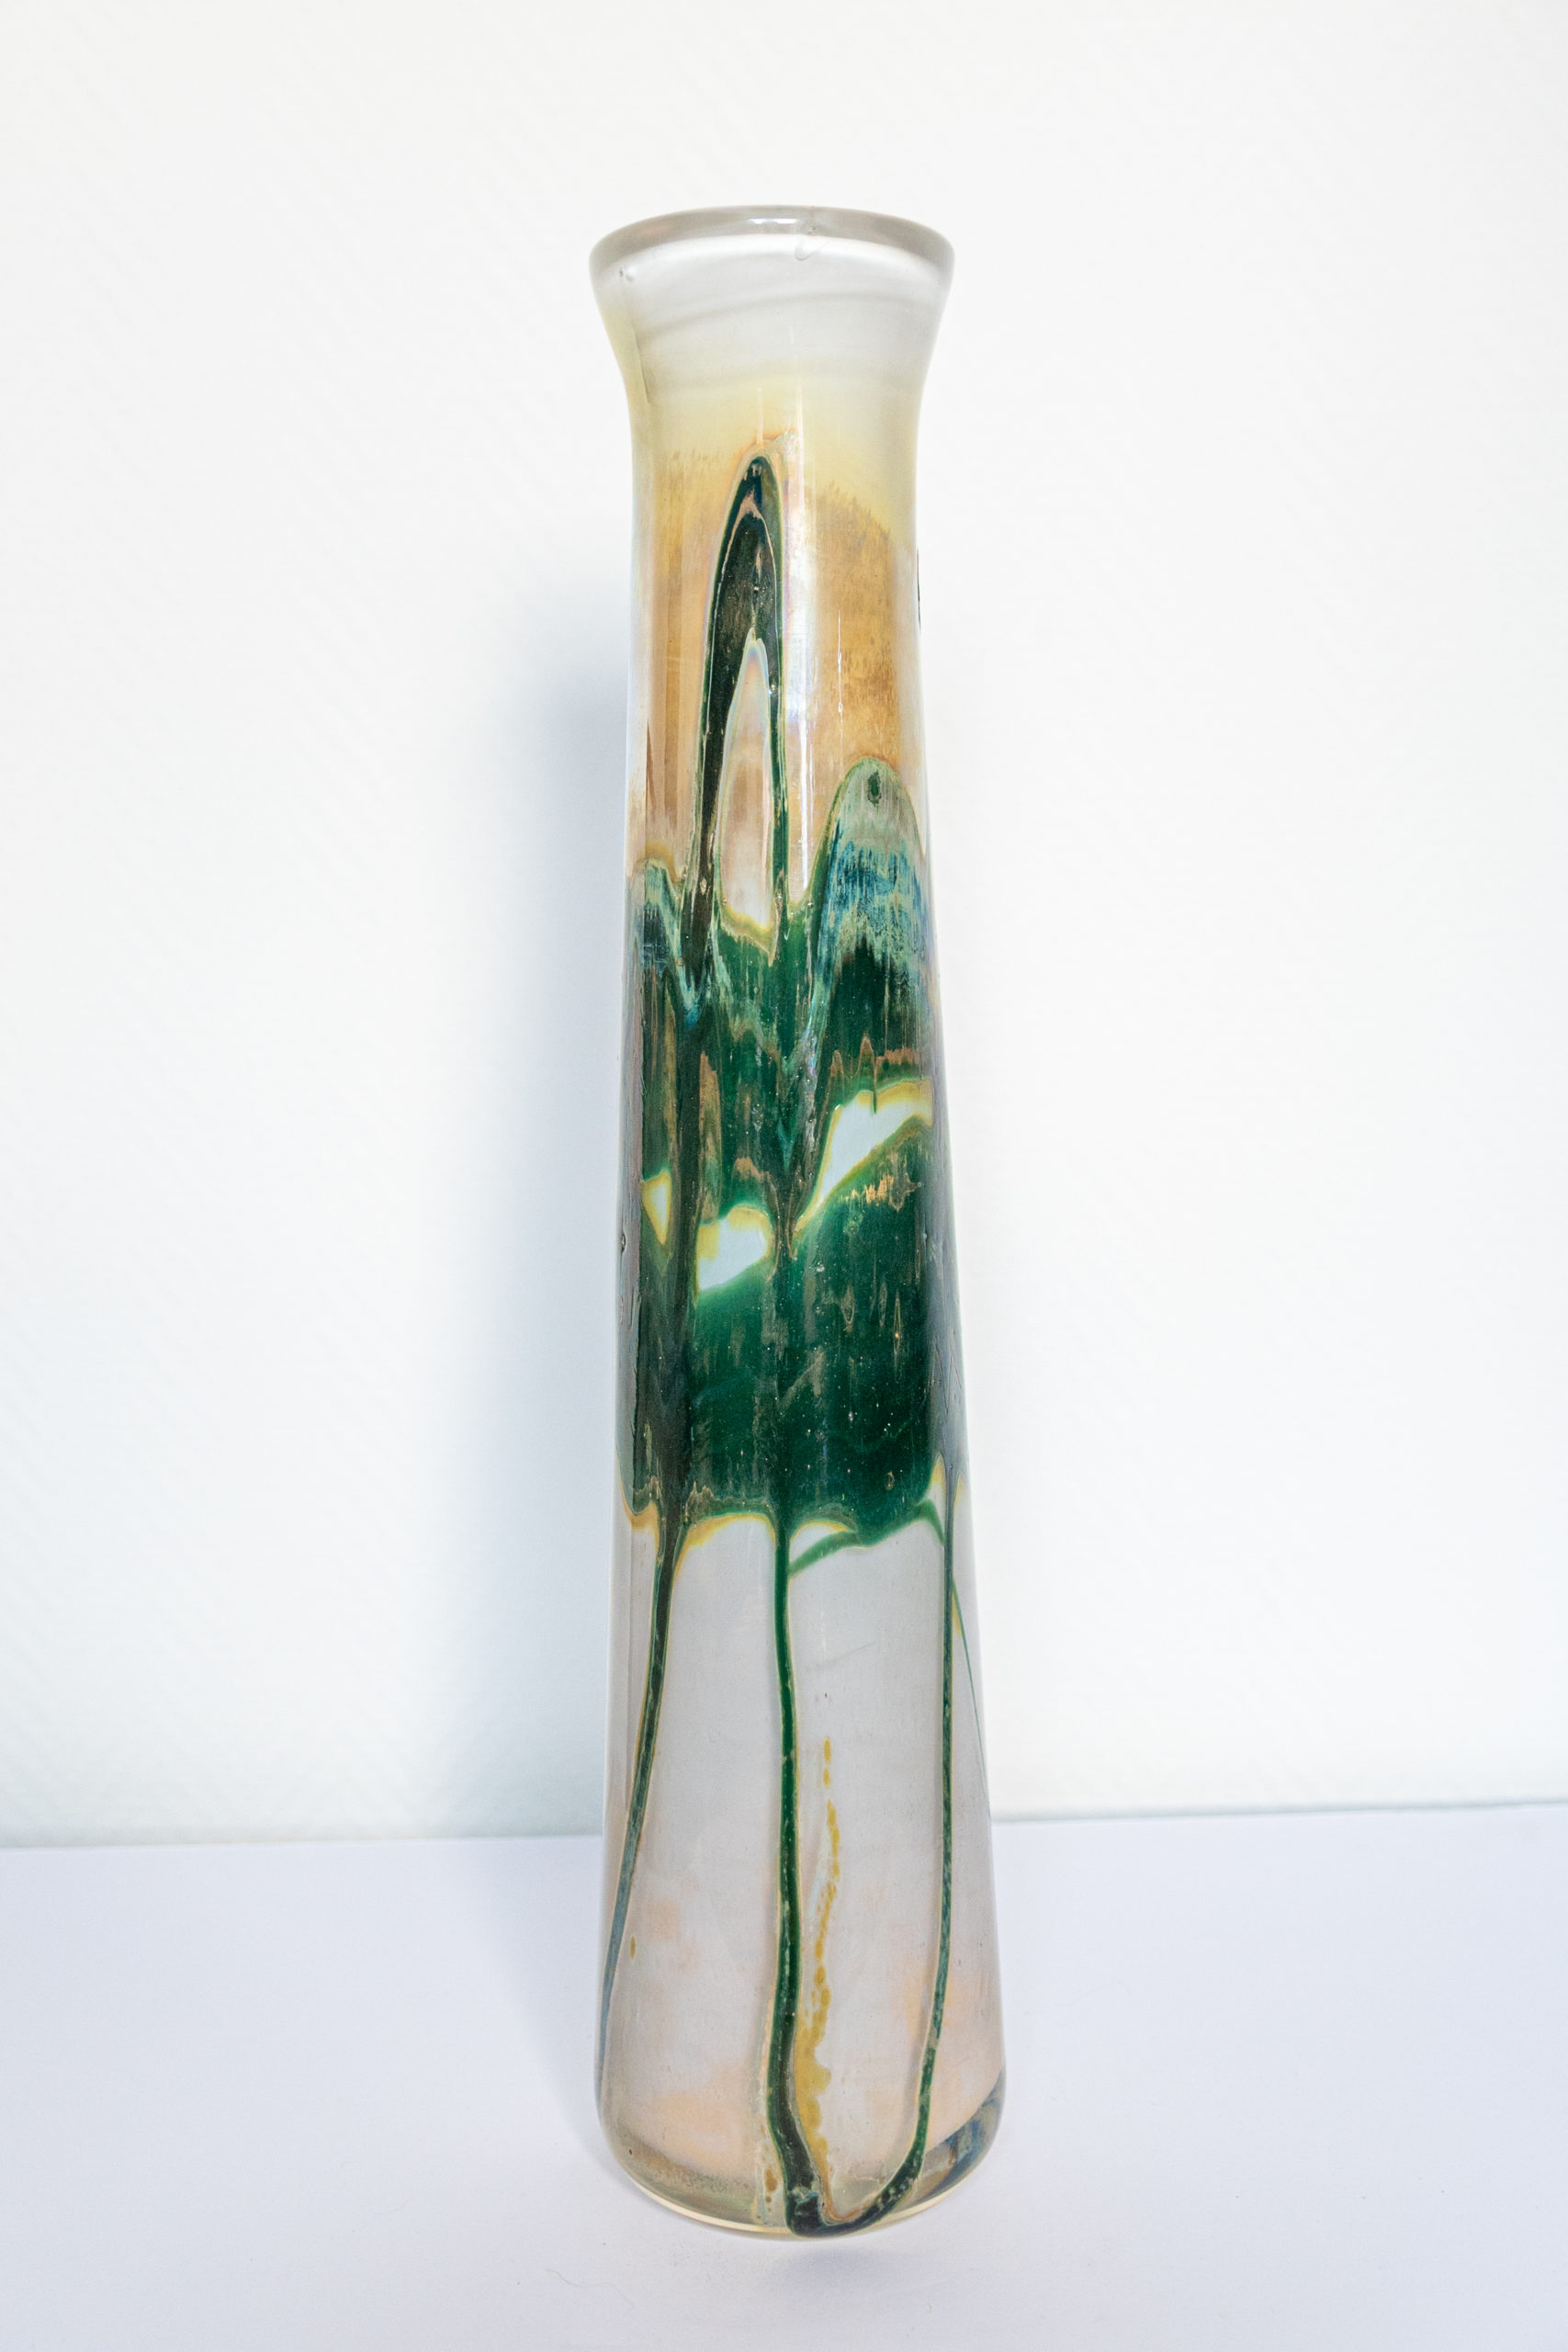 Vase-louis-leloup-louisleloup-samuelherman-valsaintlambert-auroremorisse-antiquaire-verrerie-antiquités-collections-vase-caracas-19721